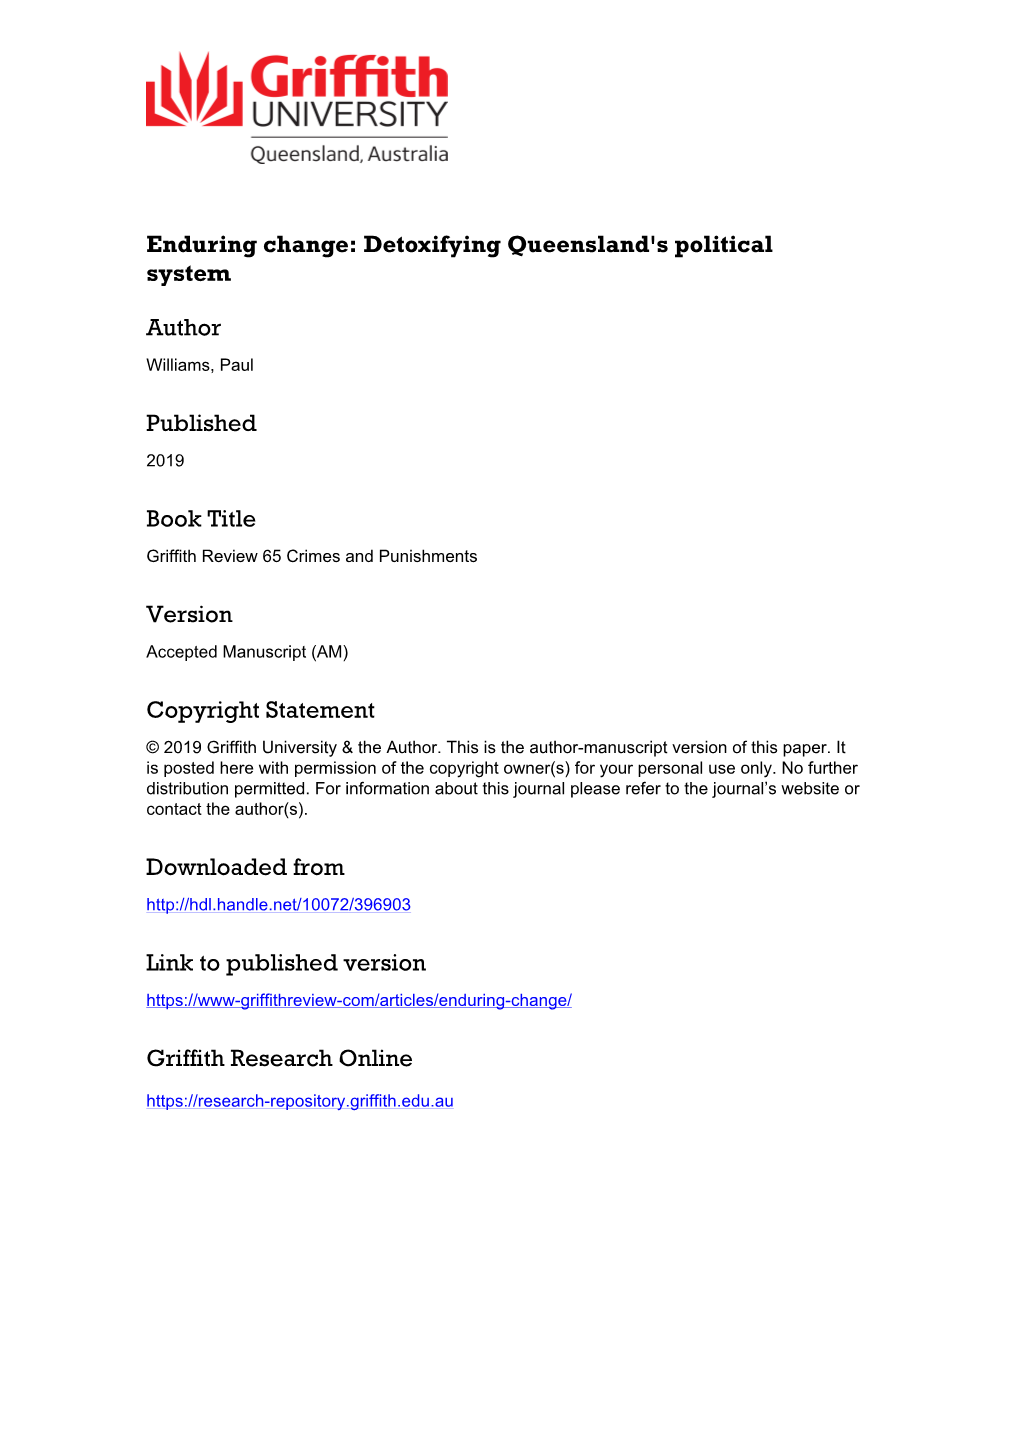 Detoxifying Queensland's Political System